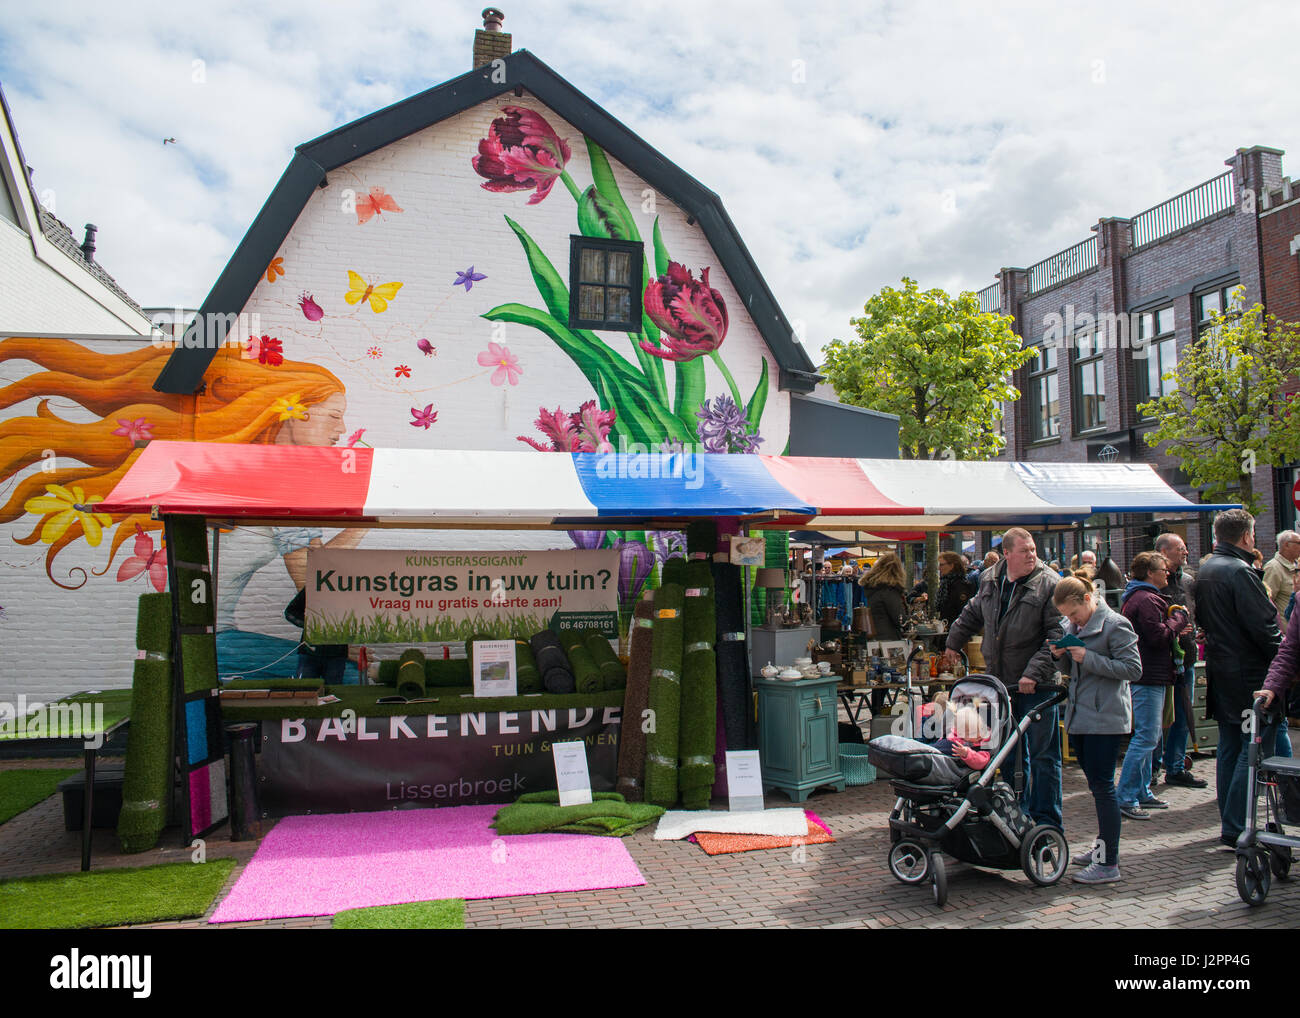 Street market in Lisse, Netherlands Stock Photo - Alamy